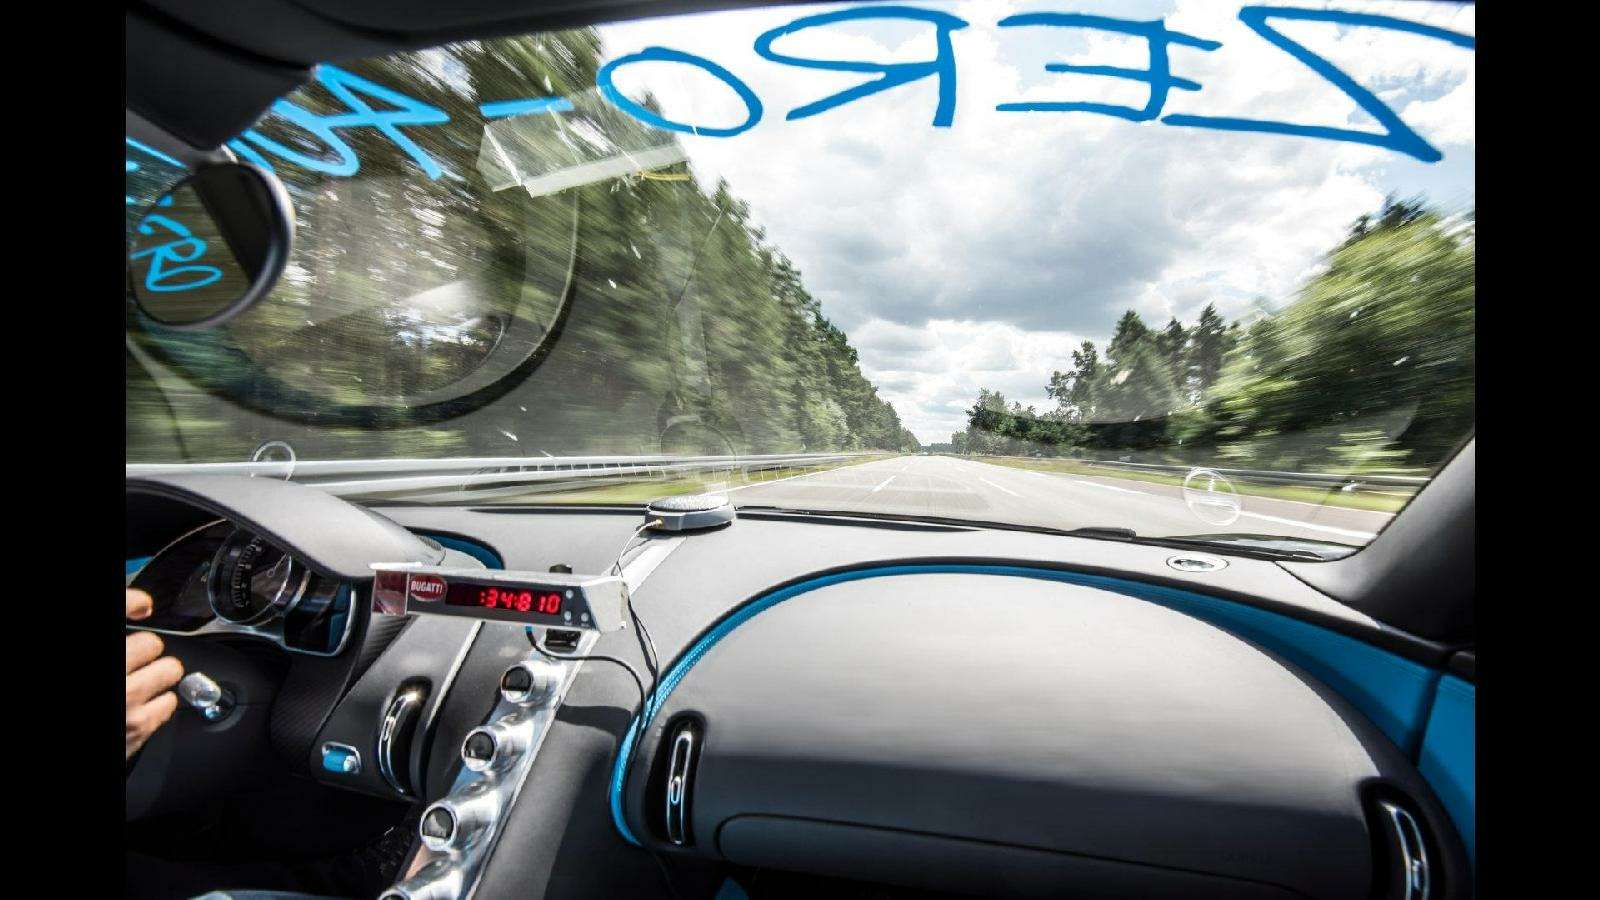 0-400-0 км/ч — видео рекордного заезда Bugatti Chiron — фото 794900